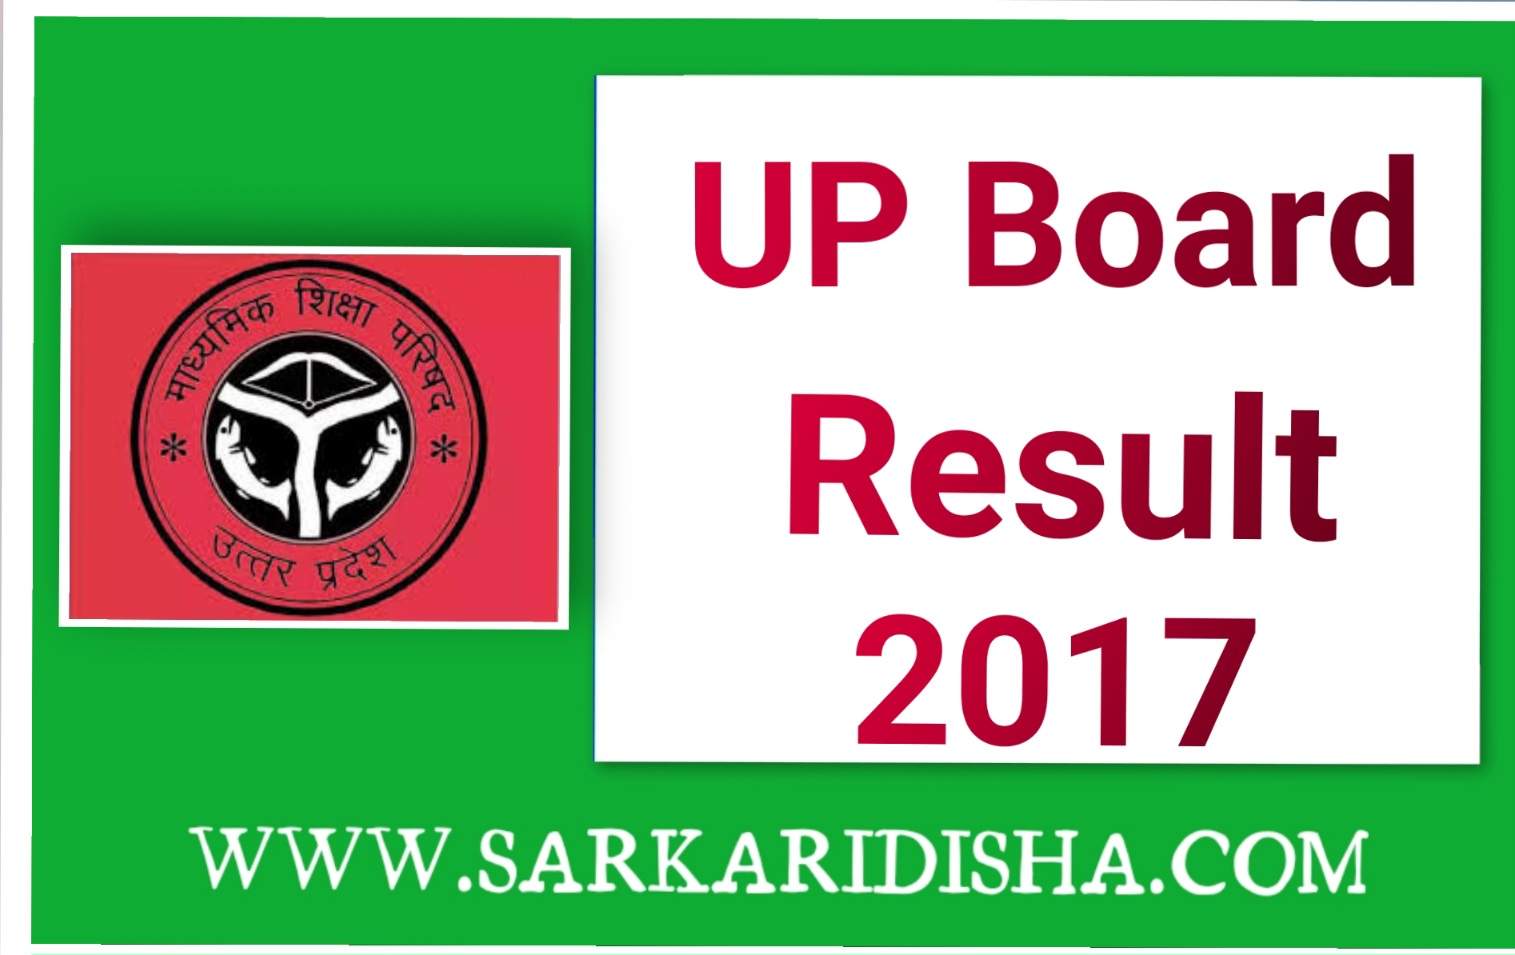 Up board result 2017